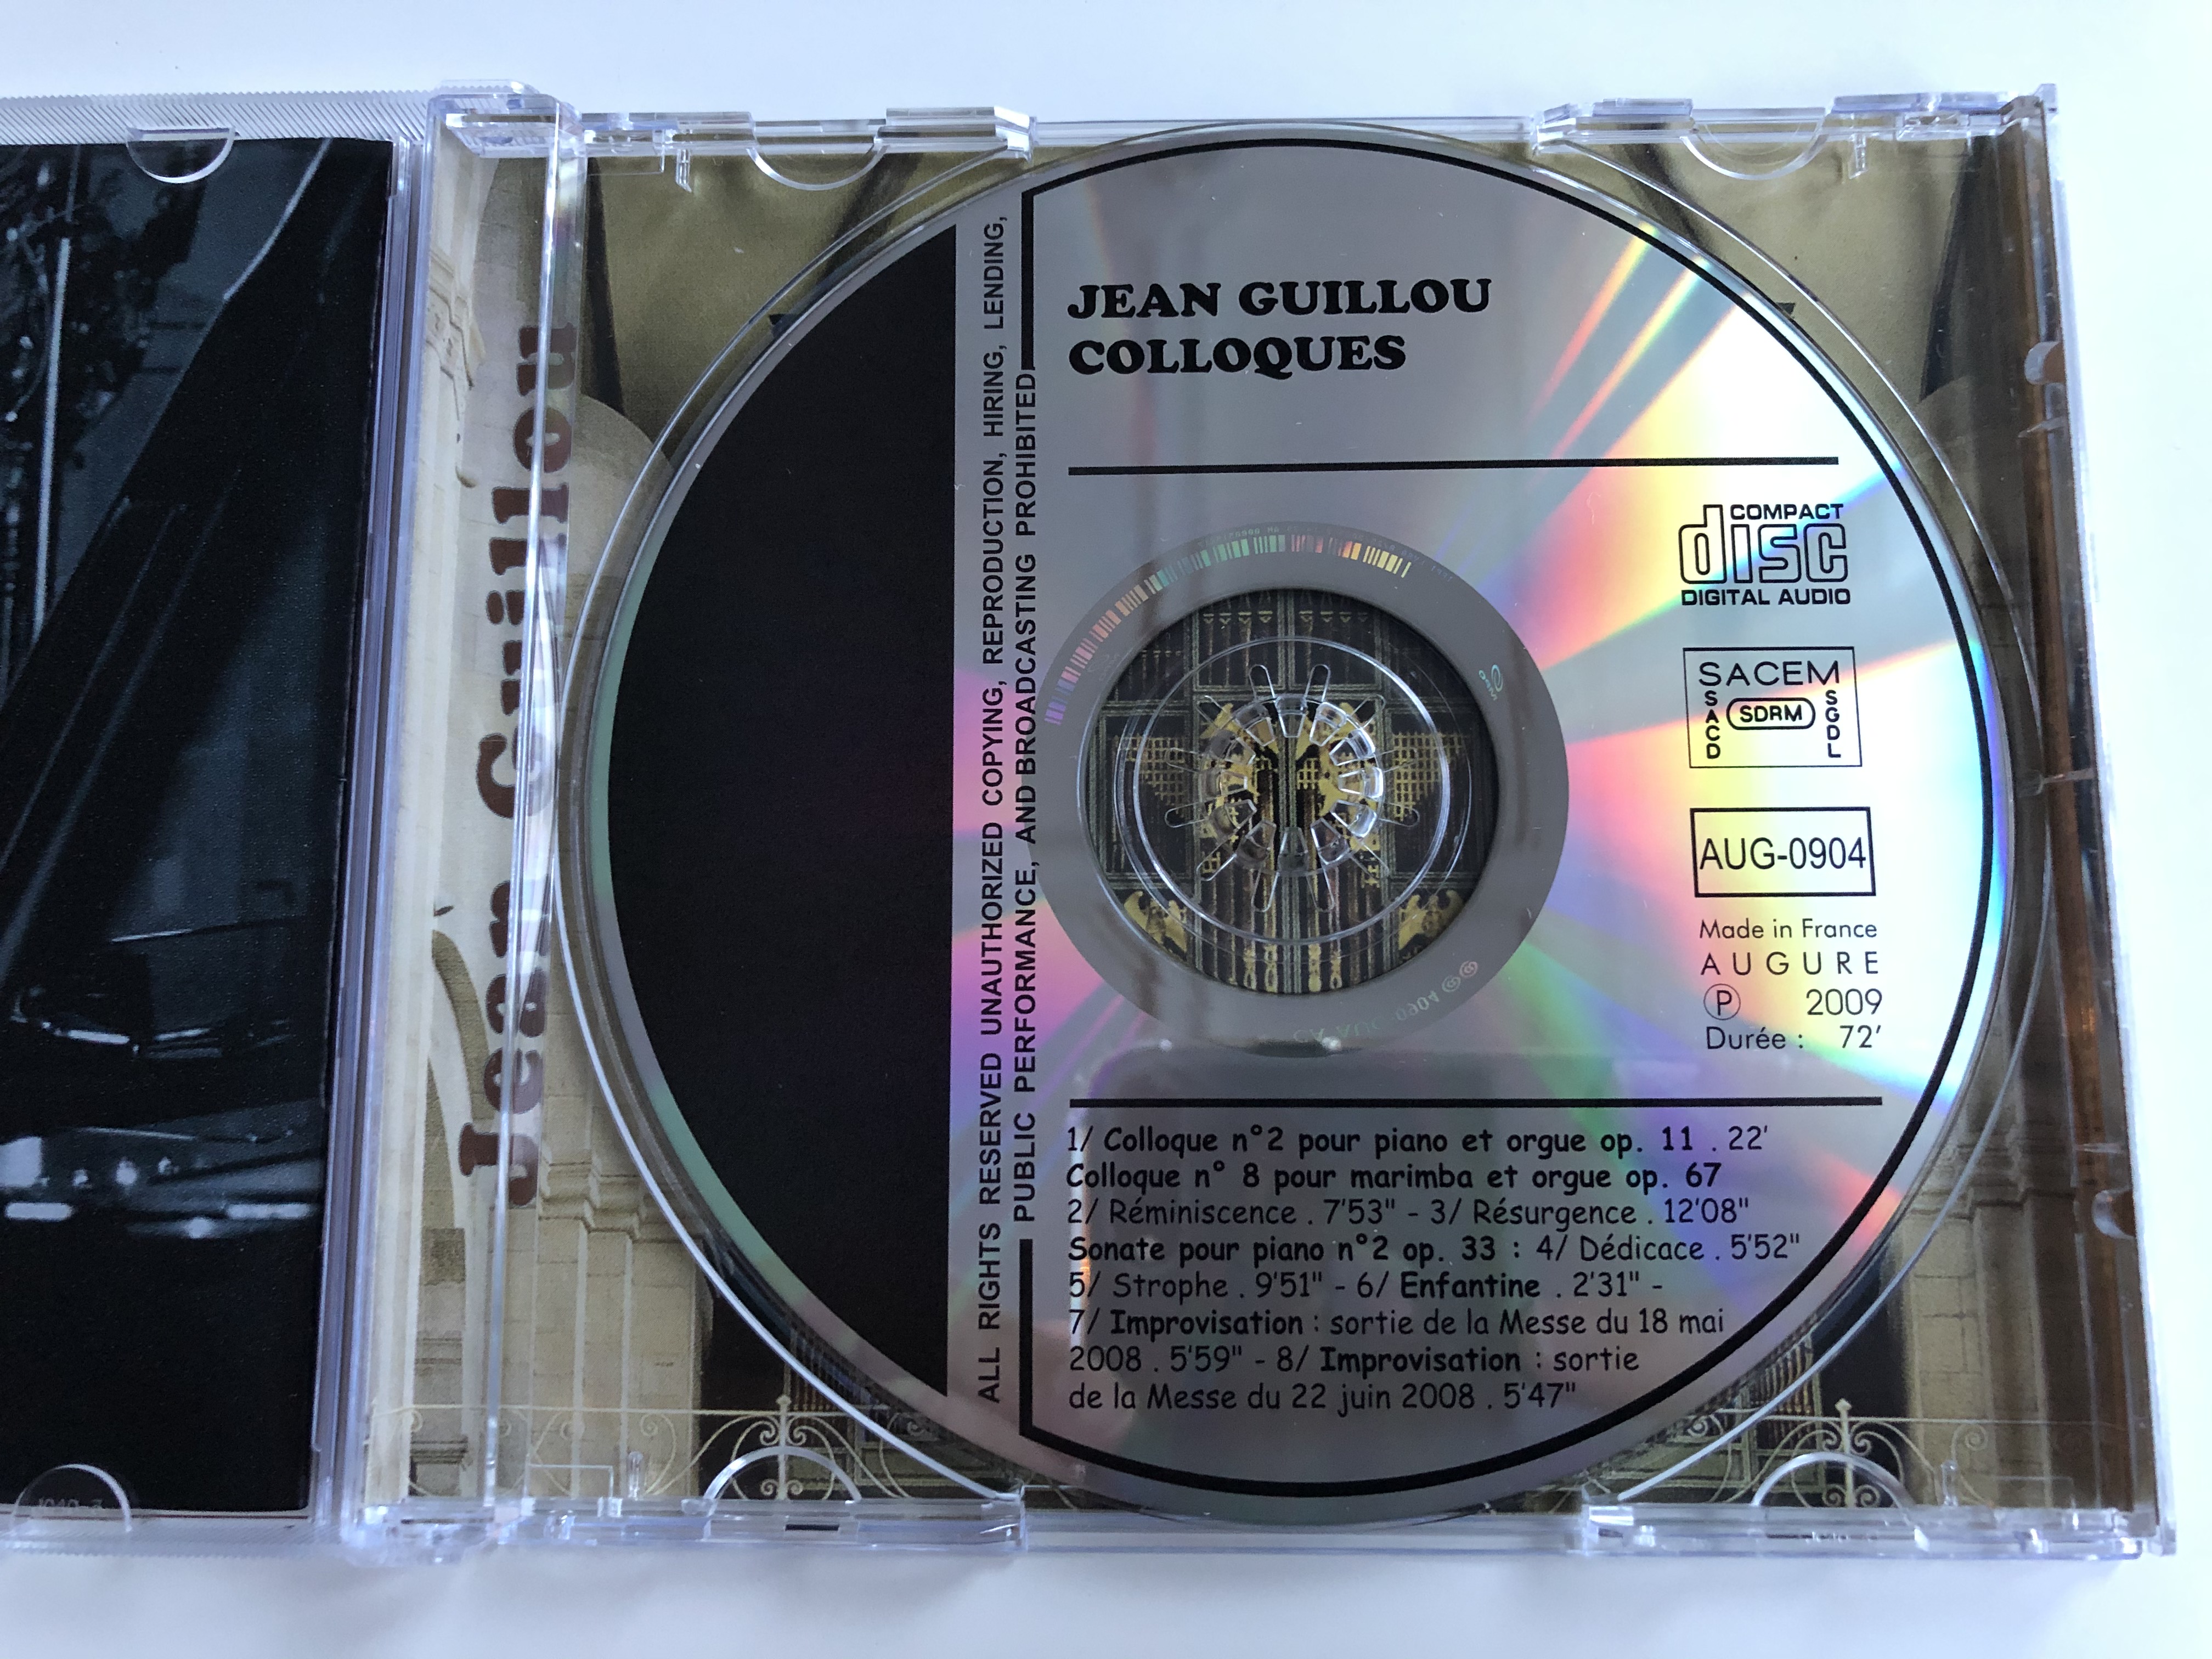 jean-guillou-colloques-jean-guillou-piano-orgue-cherry-rhodes-orgue-yi-jan-liu-marimba-world-premiere-recordings-augure-audio-cd-2009-aug-0904-8-.jpg